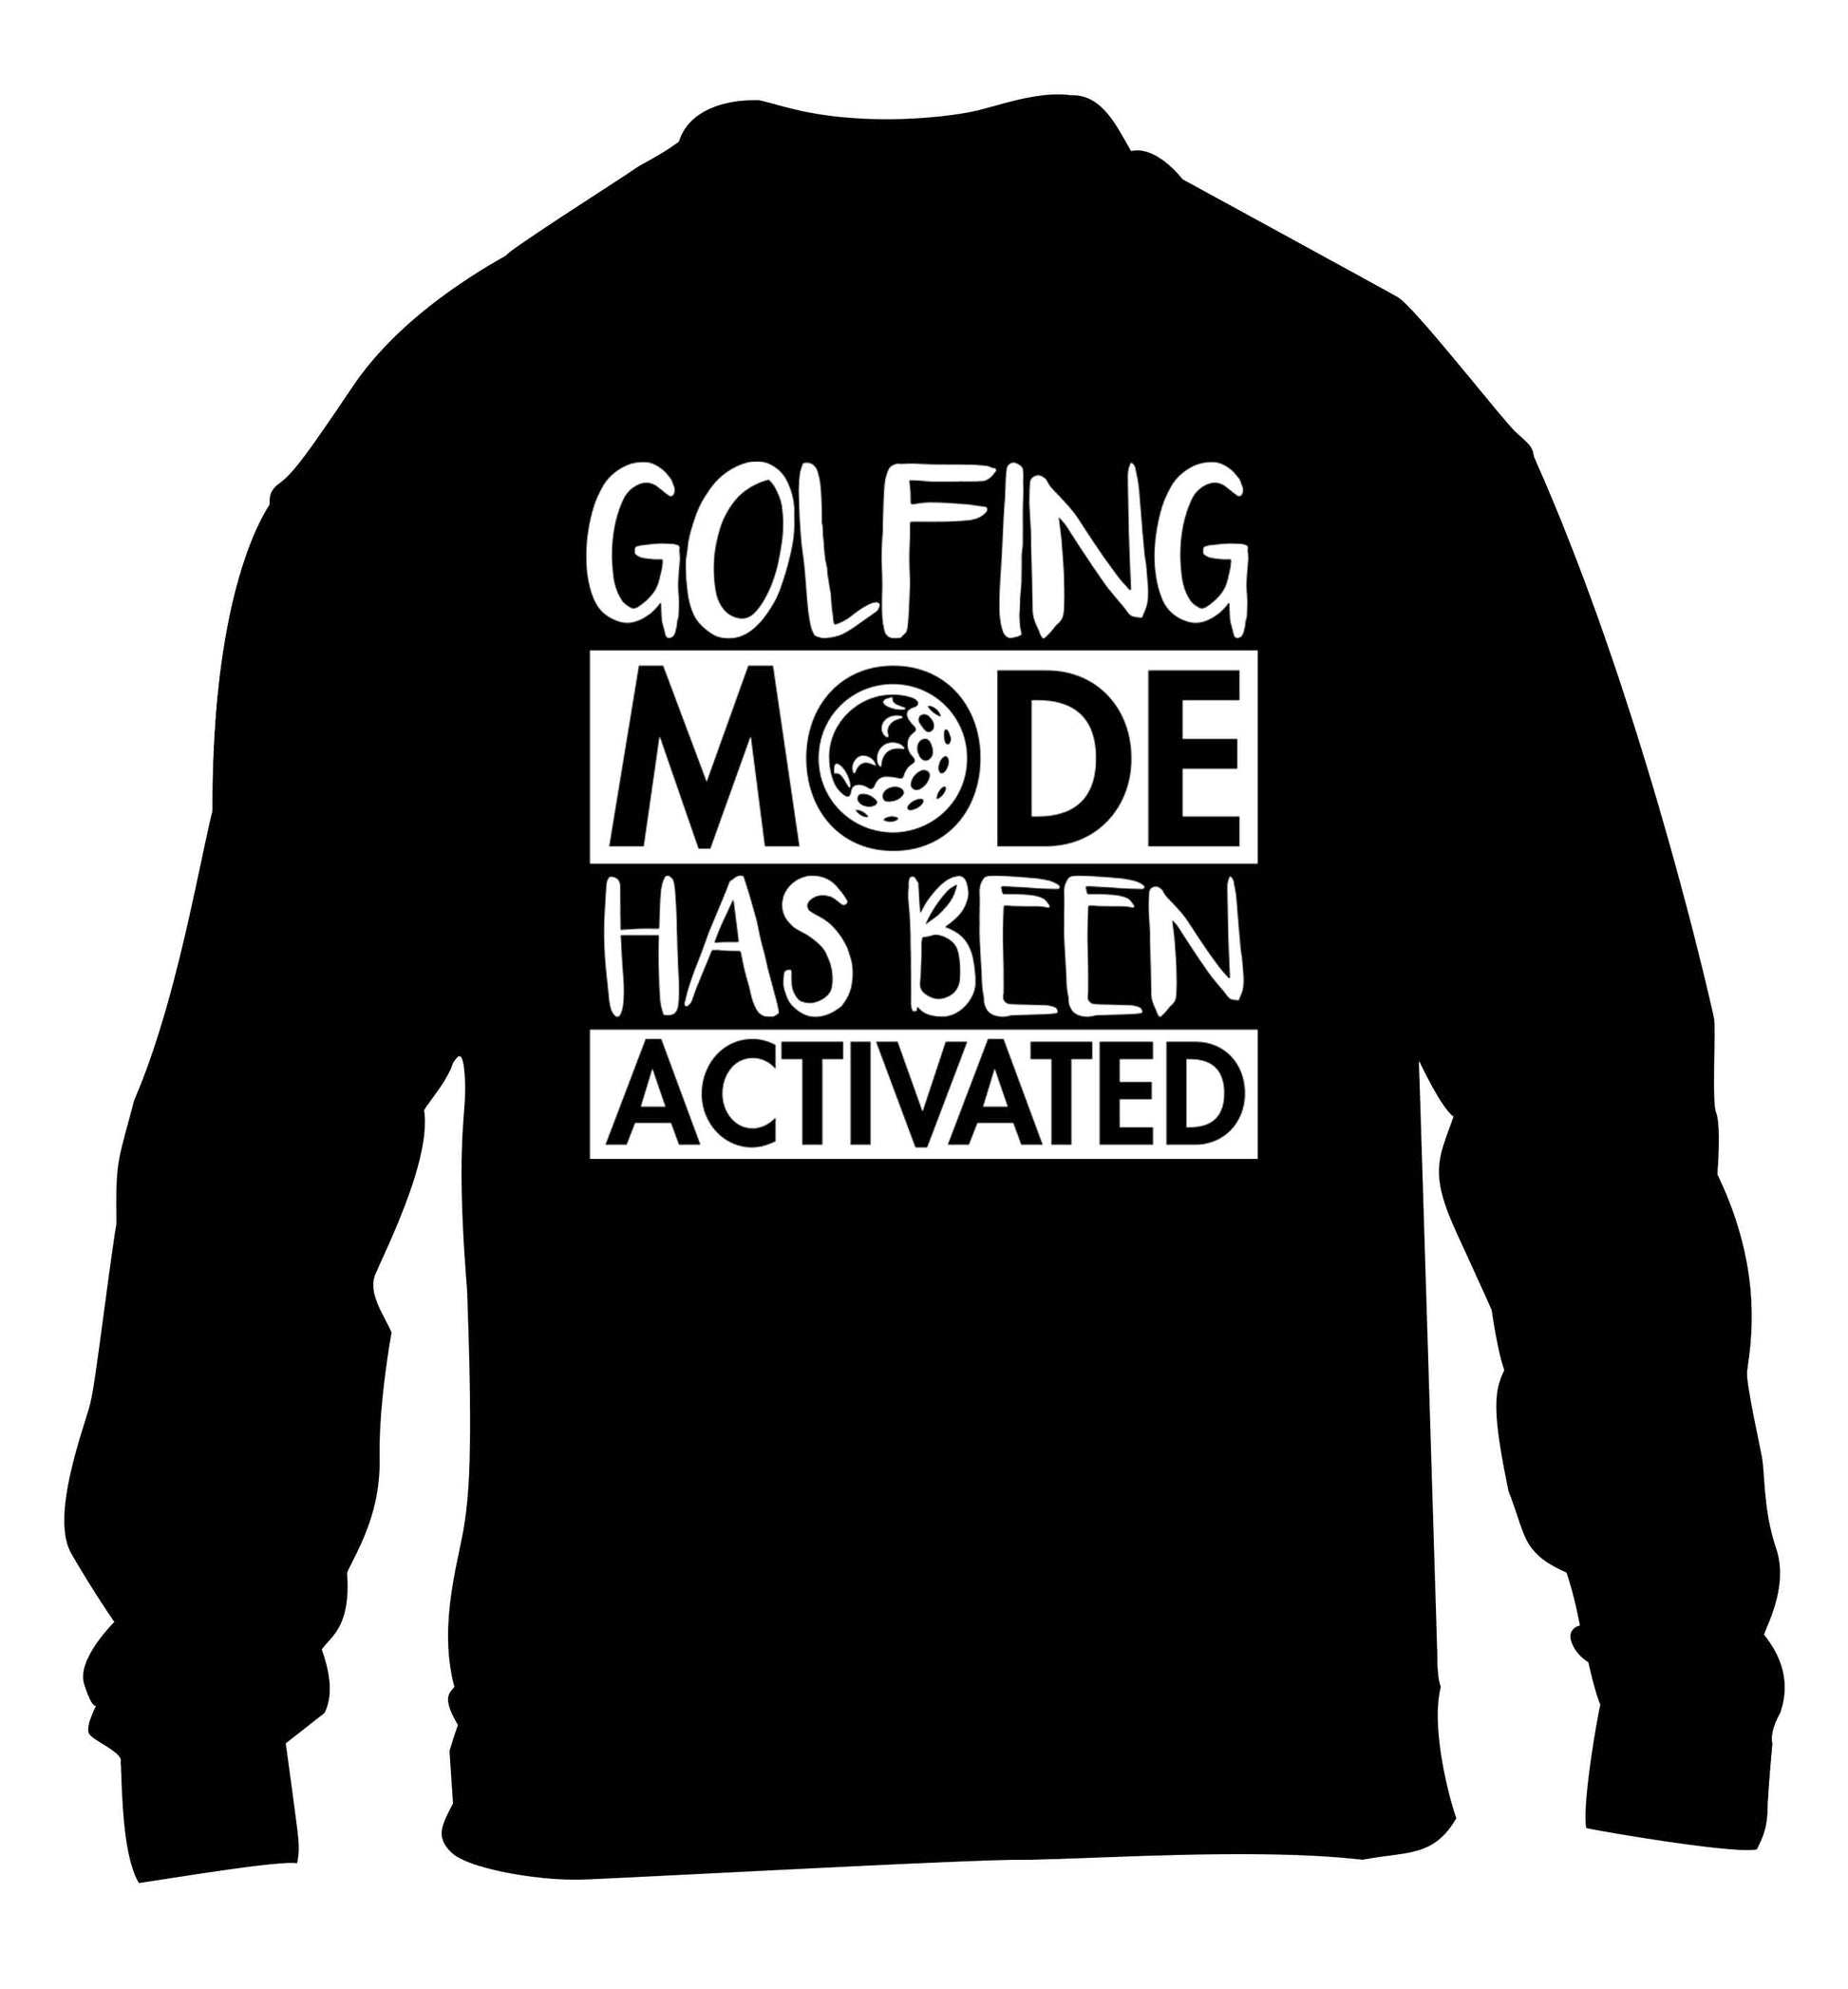 Golfing mode has been activated children's black sweater 12-13 Years